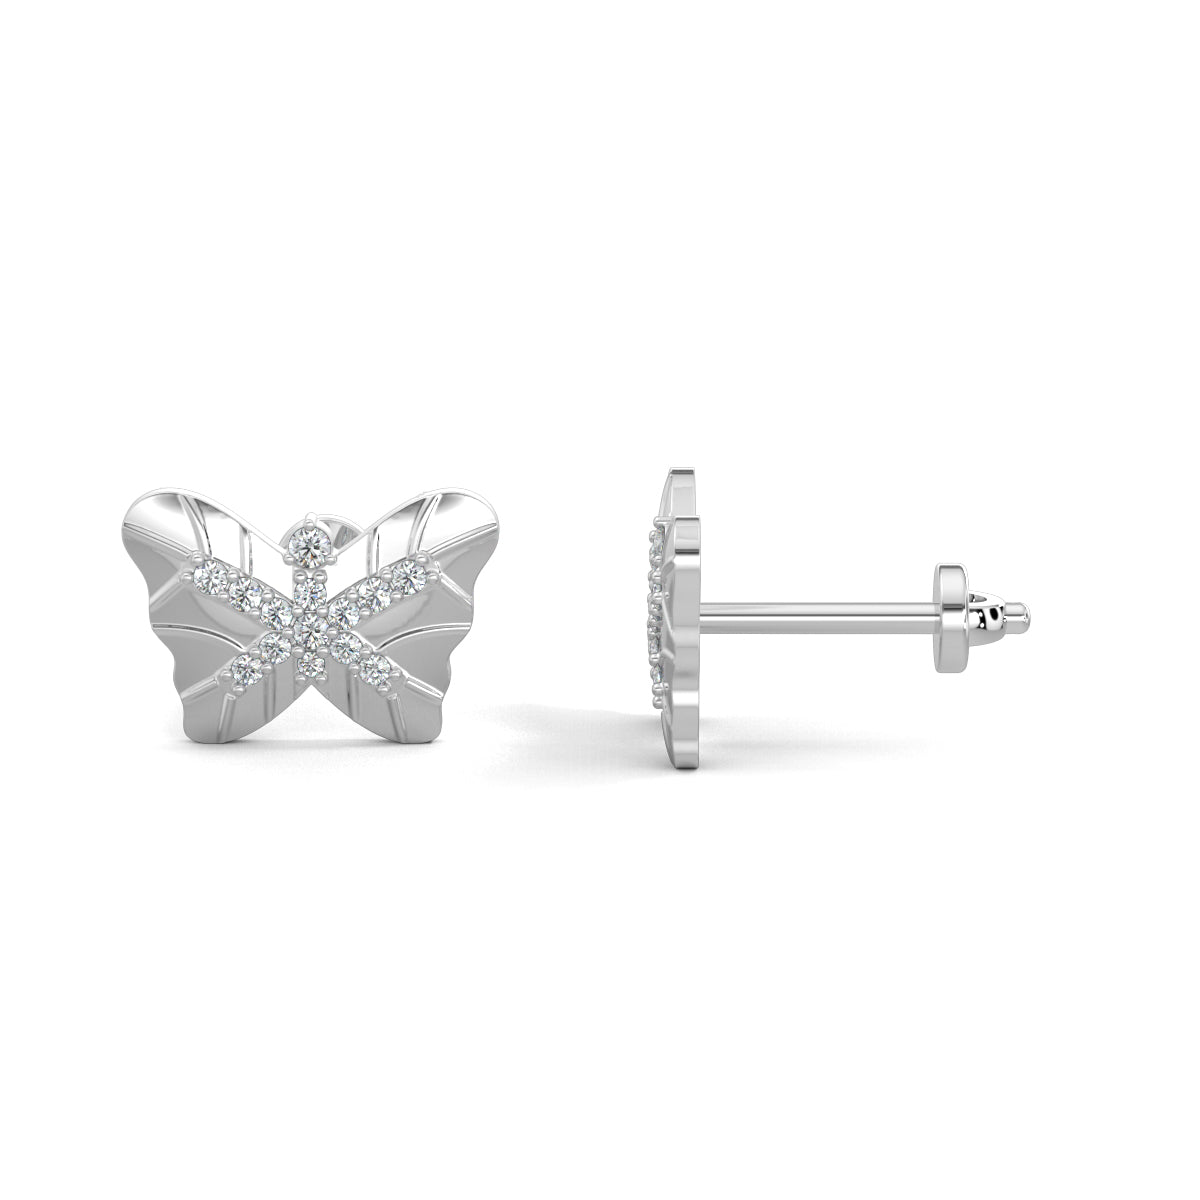 White Gold, Diamond stud earrings, butterfly shape, natural diamonds, lab-grown diamonds, exquisite jewelry, elegant earrings, shimmering diamonds, sophisticated design